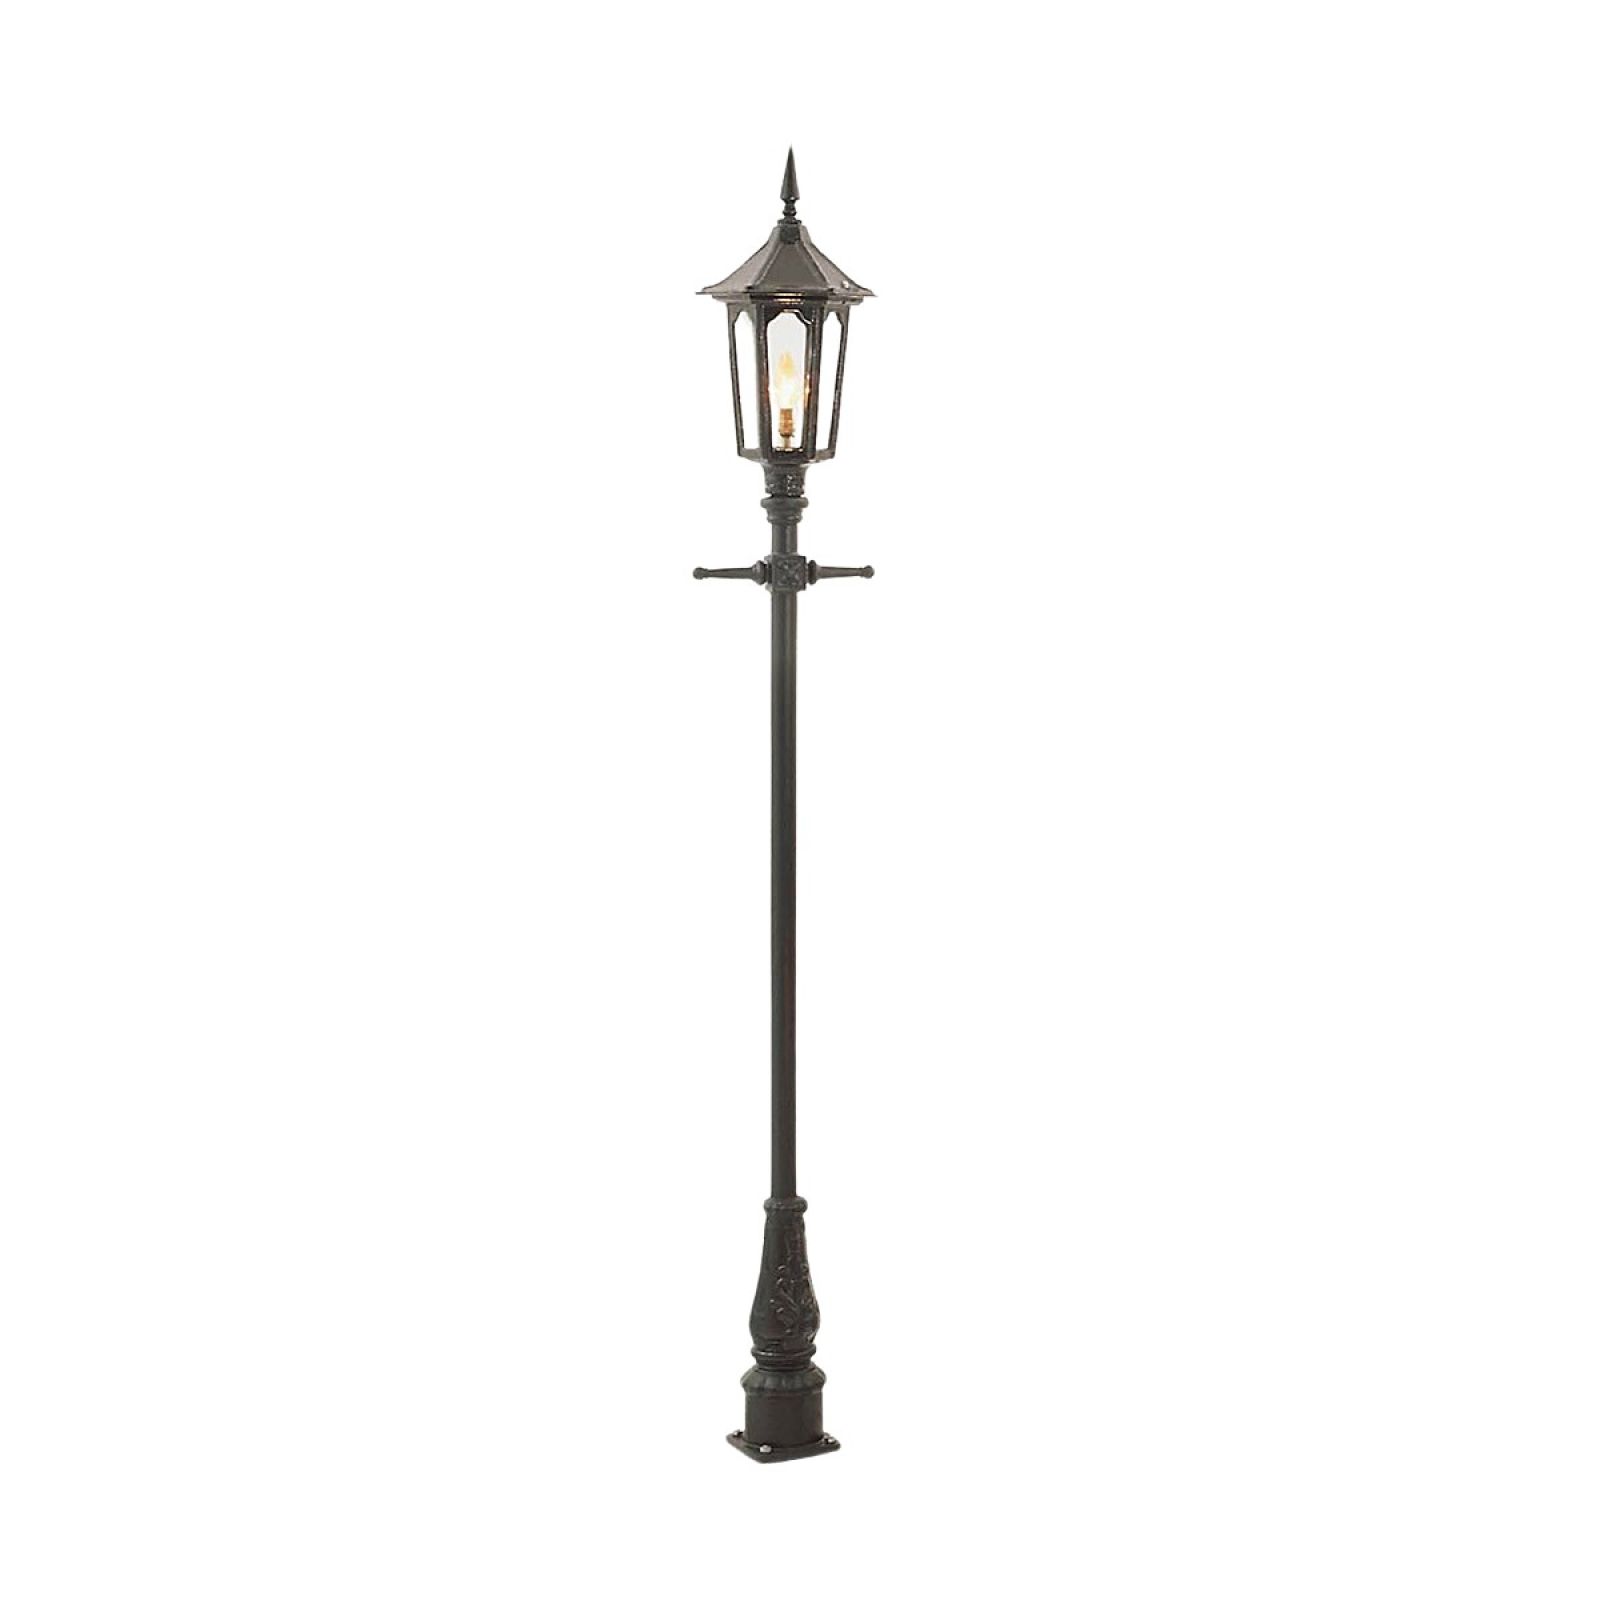 Lamp post 2260mm high and hexagonal cast alloy lantern